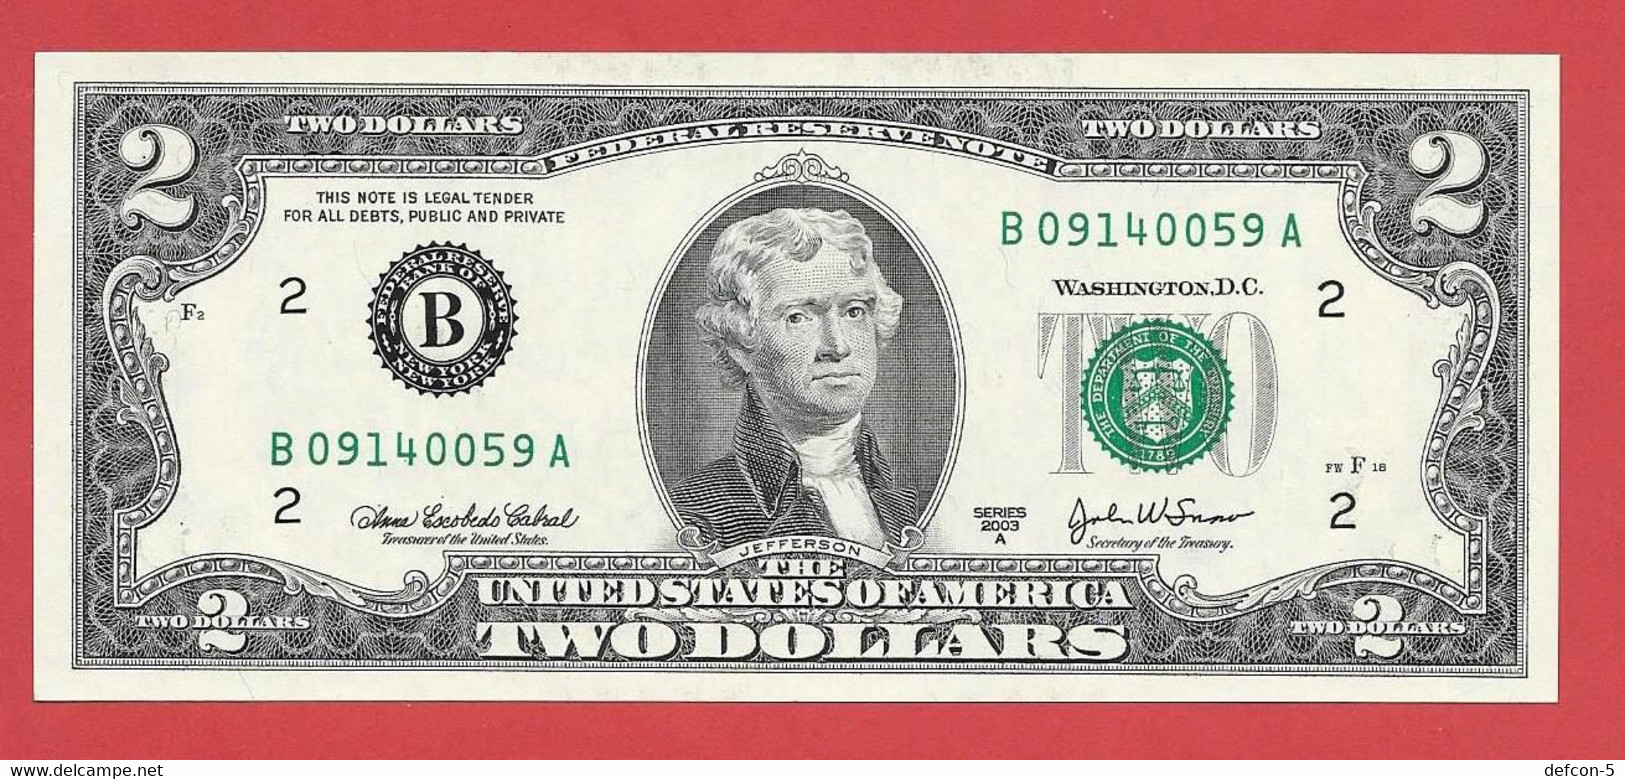 Rarität ! 2X 2 US-Dollar fortlaufend auf Informations-Blatt [2003] > B 09140058 A + ...59 A < {$002-019BL}